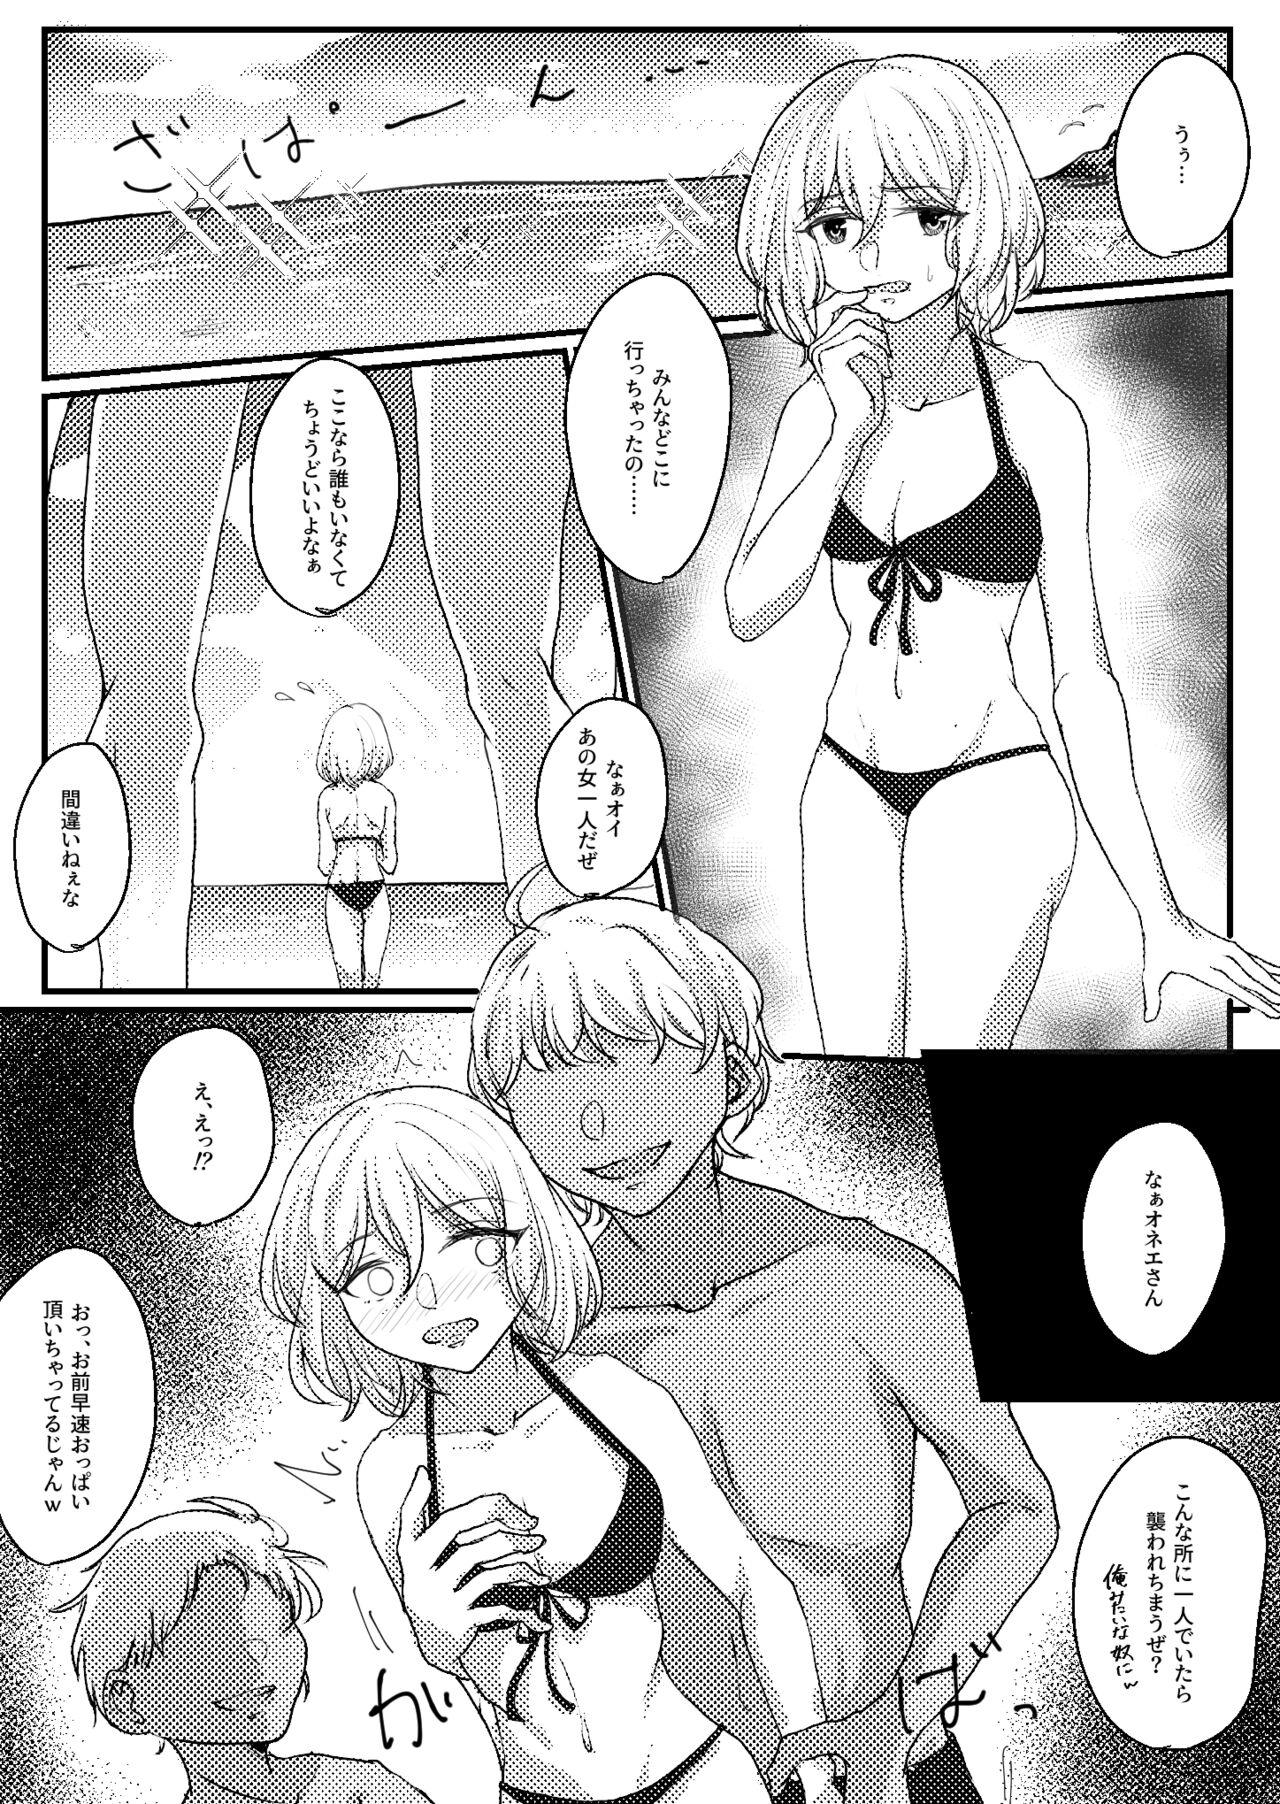 Mashiro beach sex commission 1